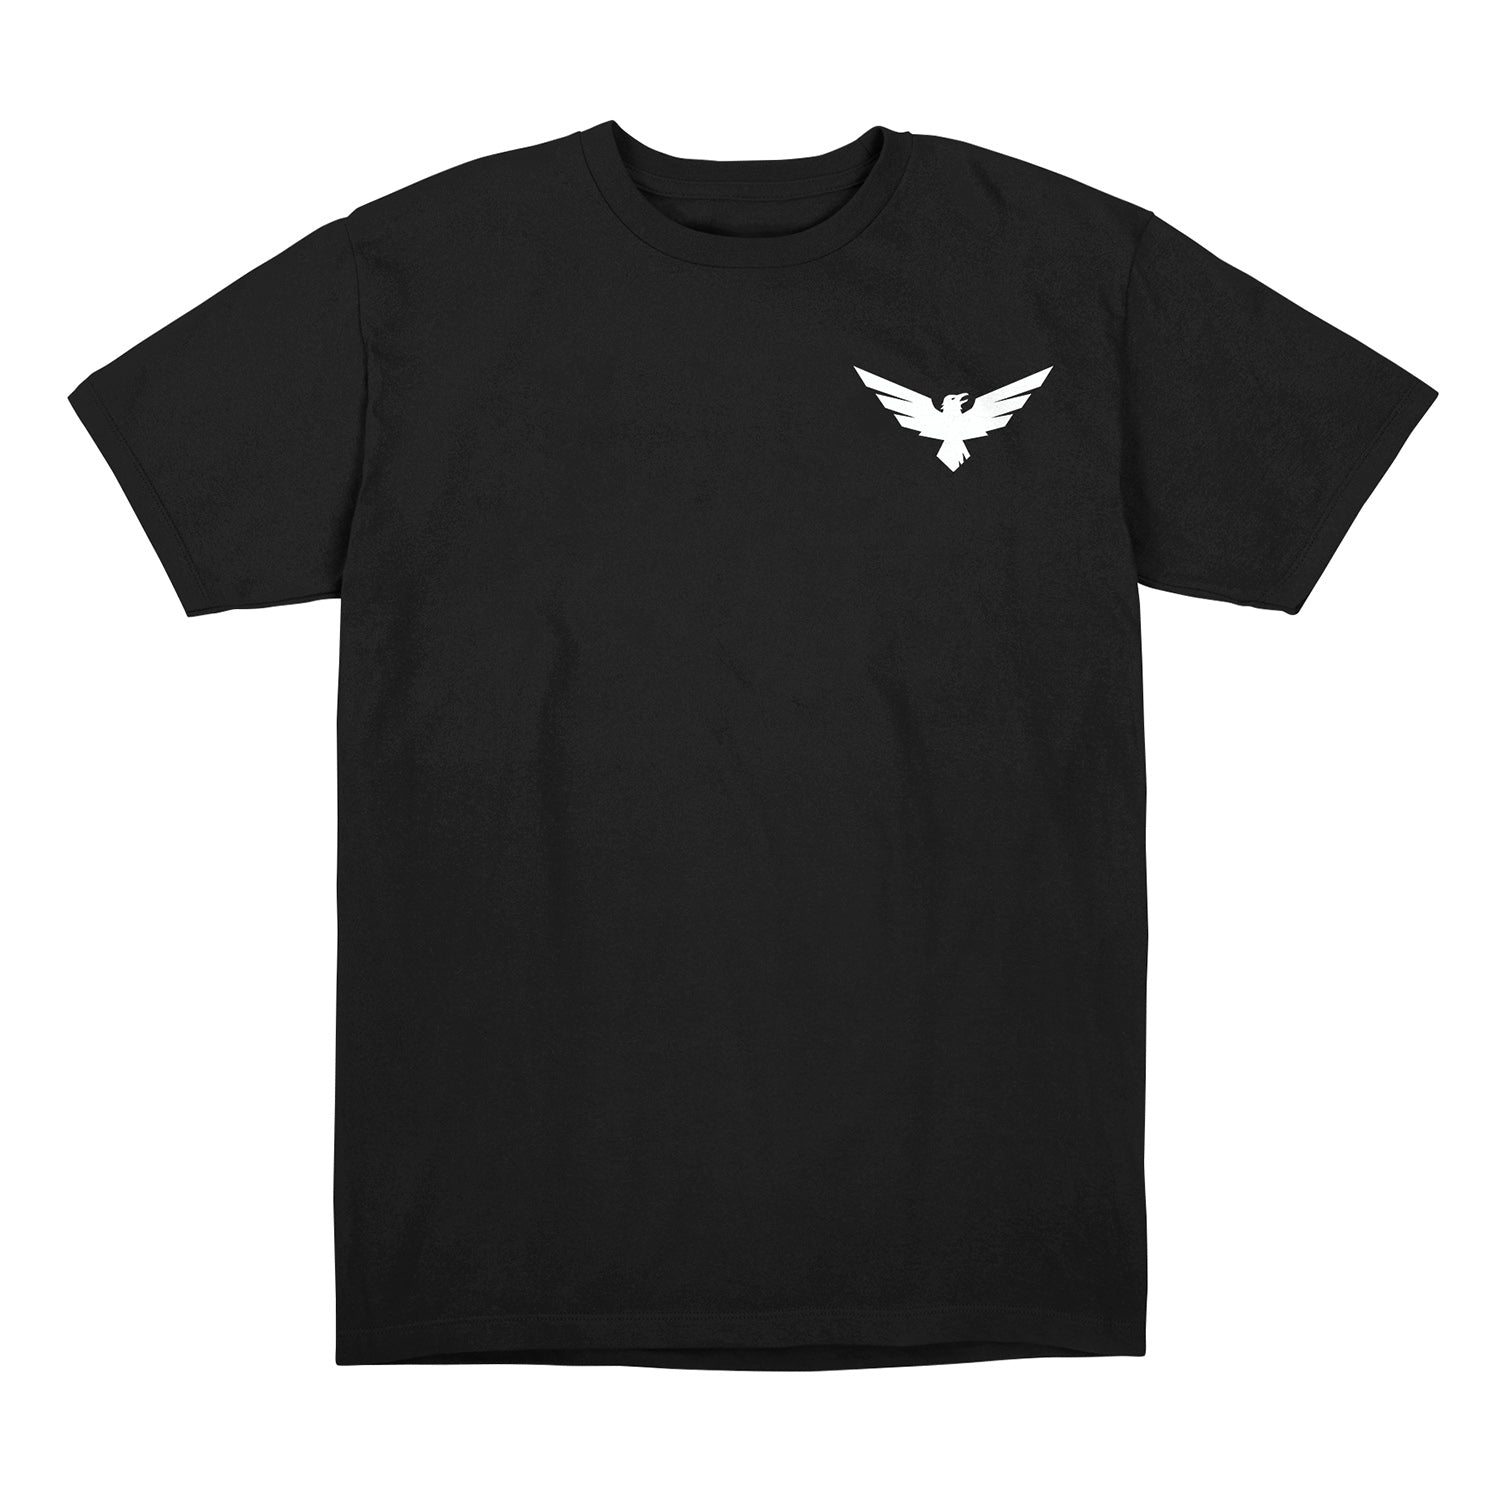 London Royal Ravens Slogan Black T-Shirt - Front View